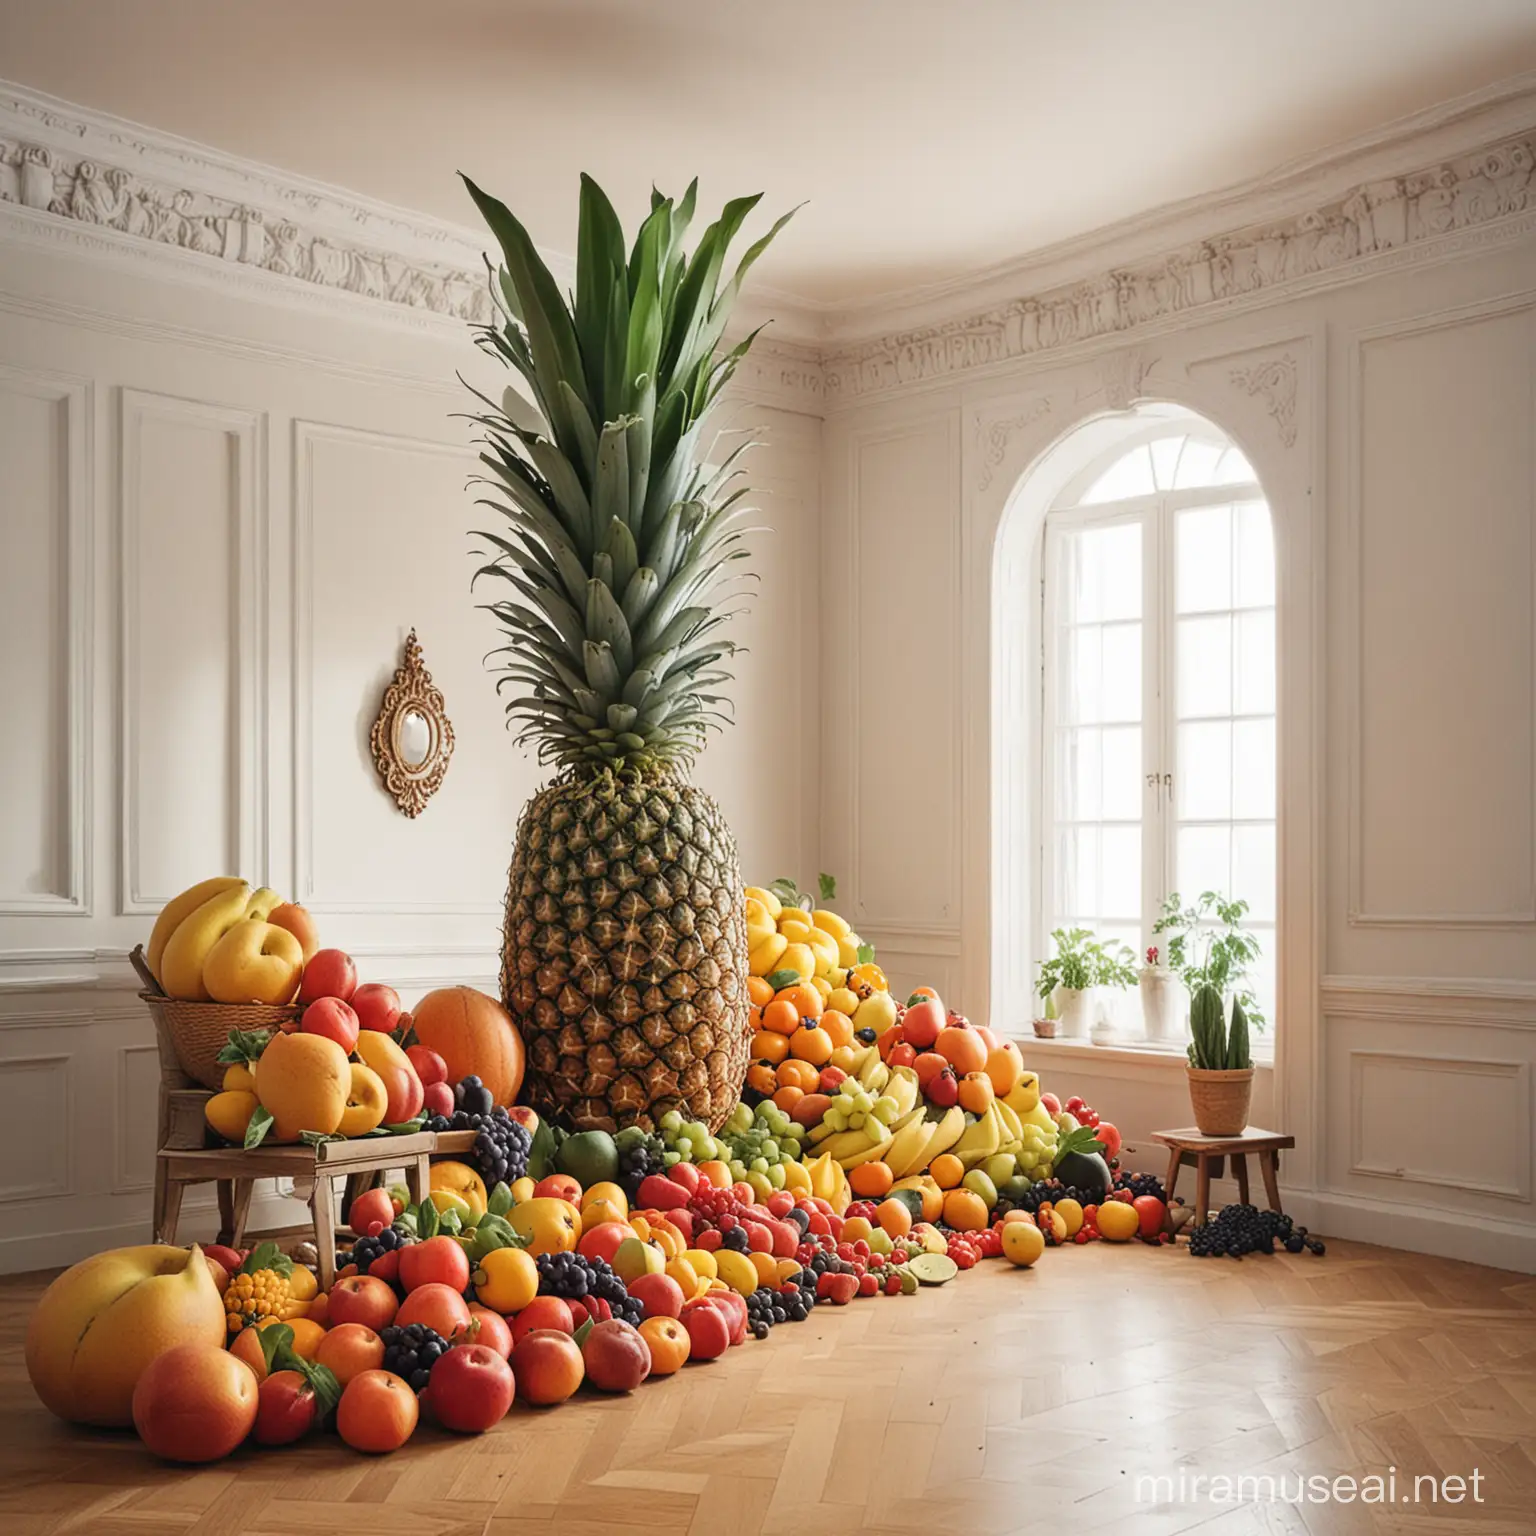 Vibrant Giant Fresh Fruits Adorning Room Interior